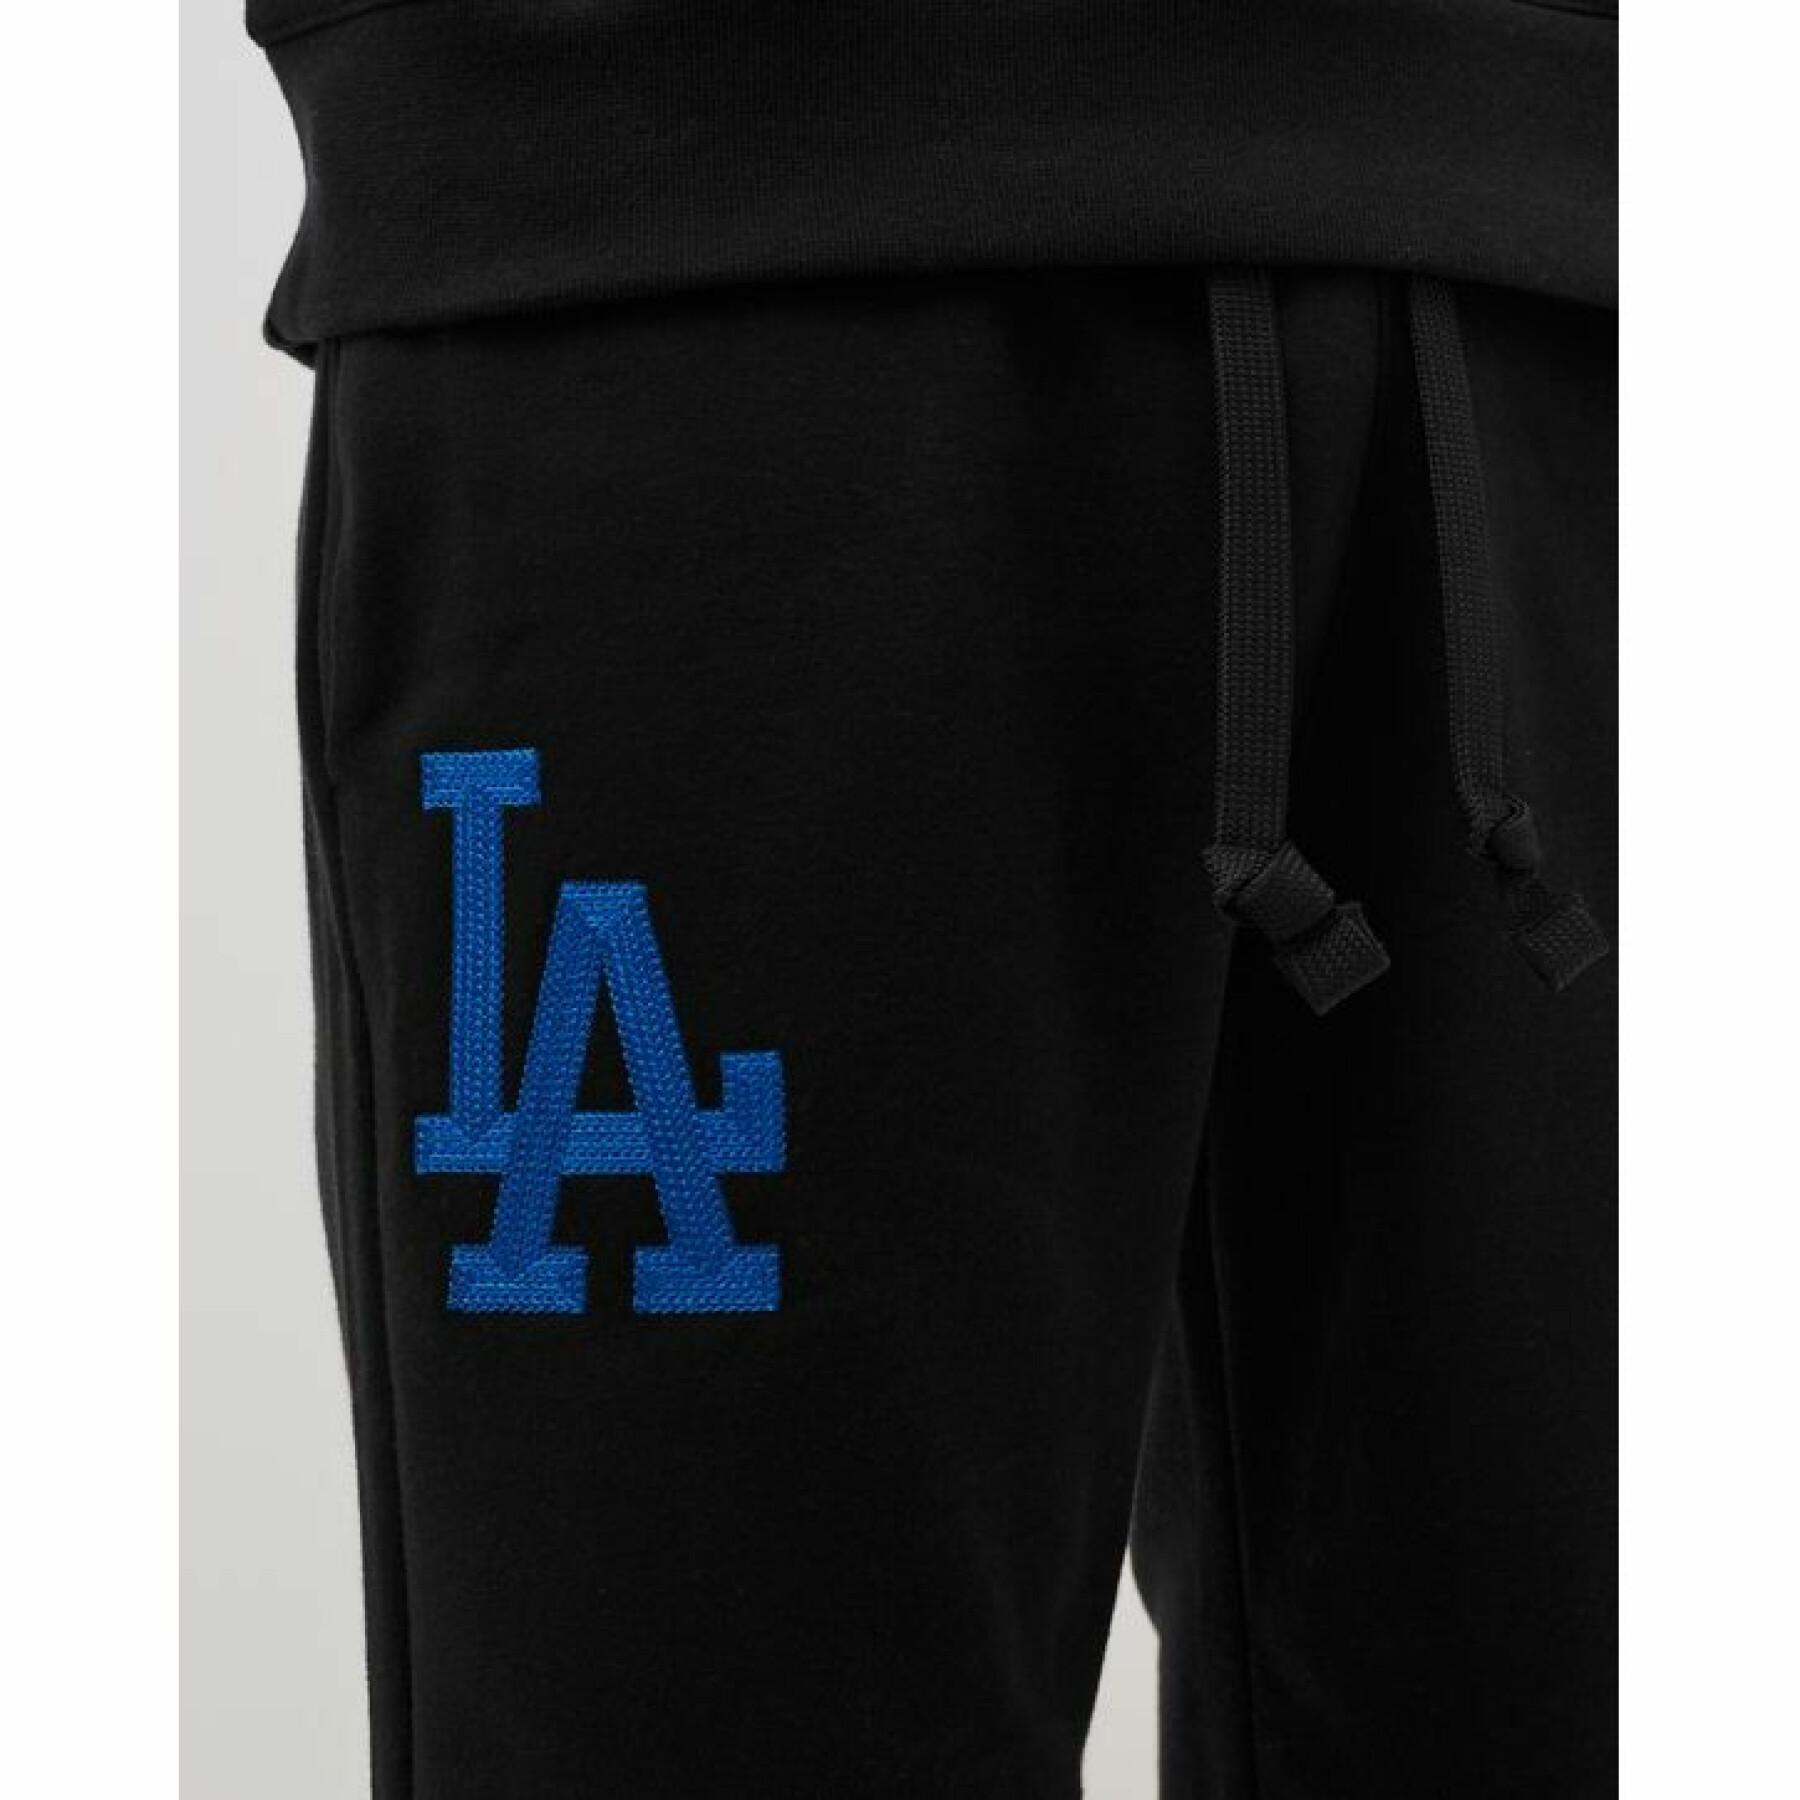 Pantalón de chándal Champion MLB Los Angeles Dodgers